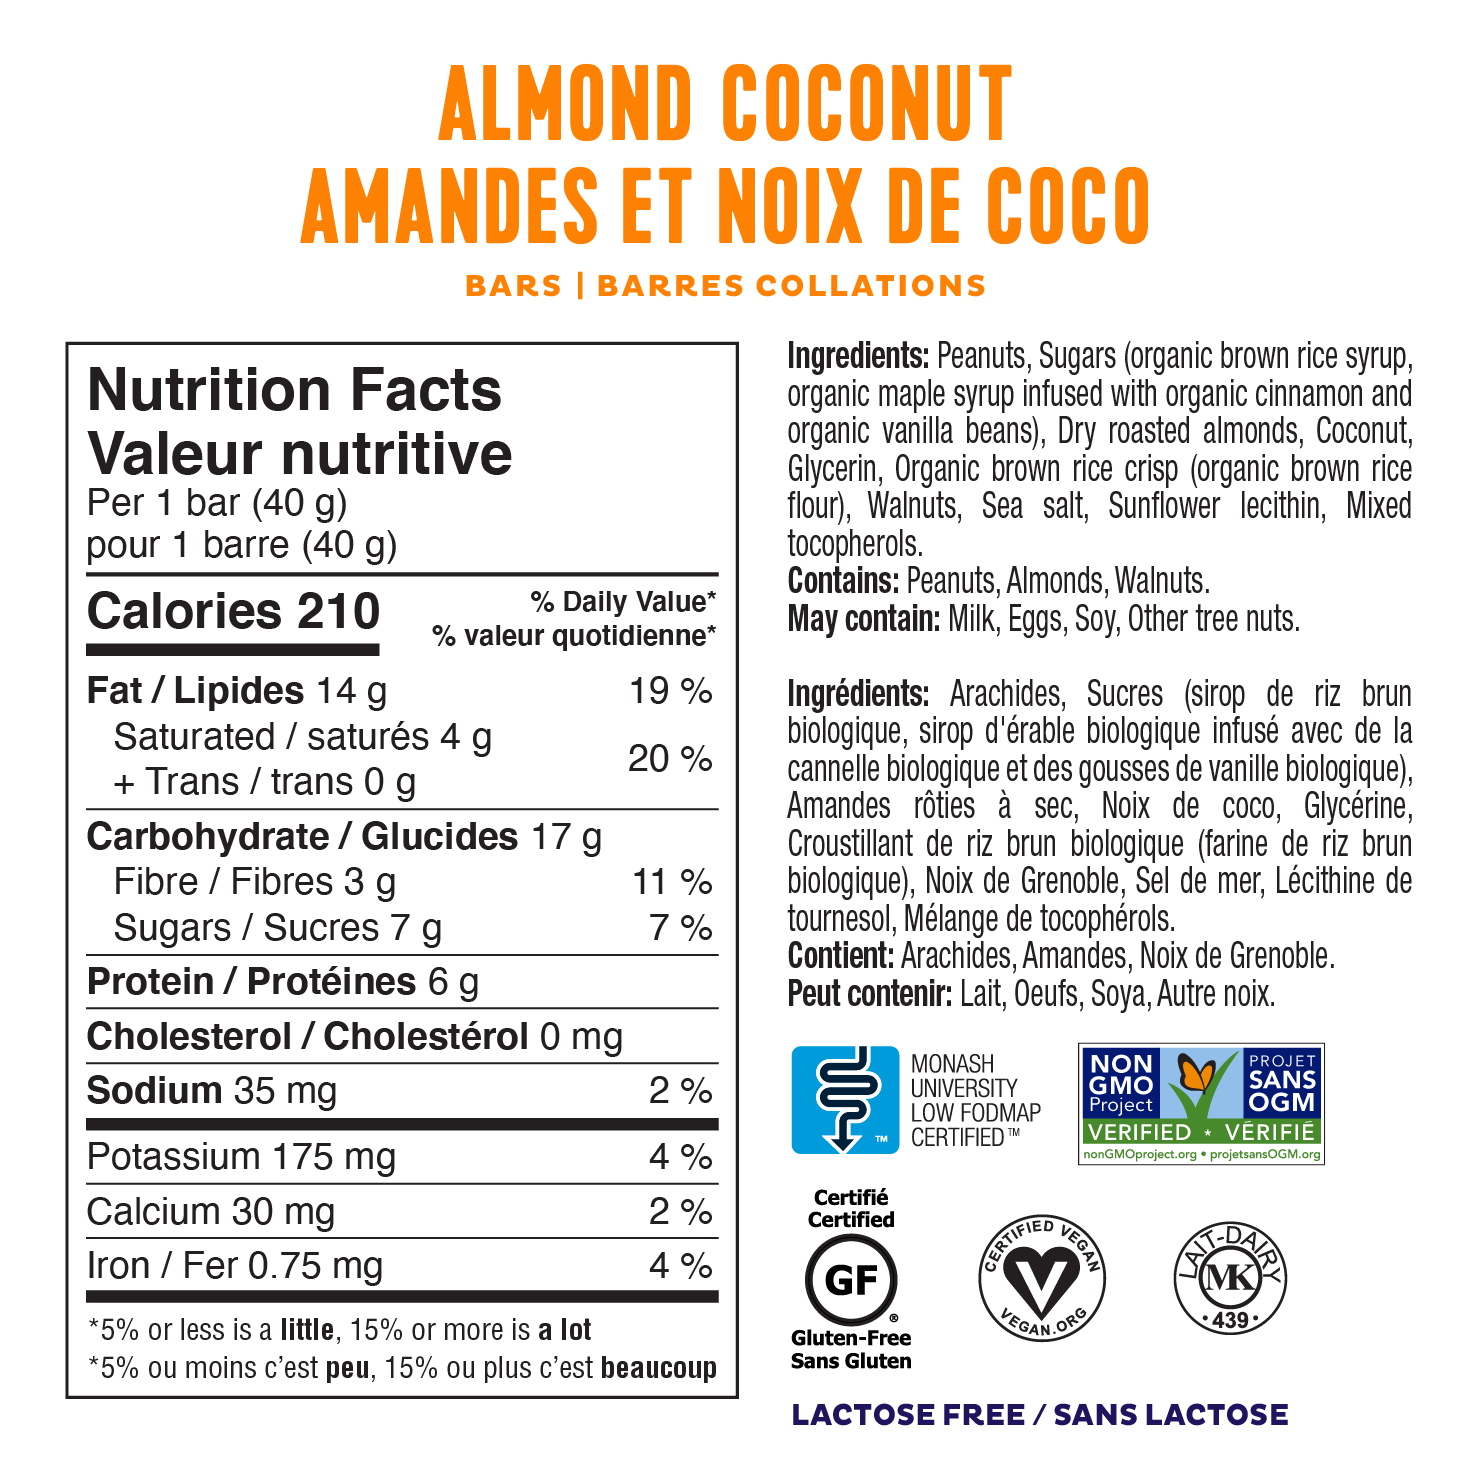 Almond Coconut Bars - Box of 12